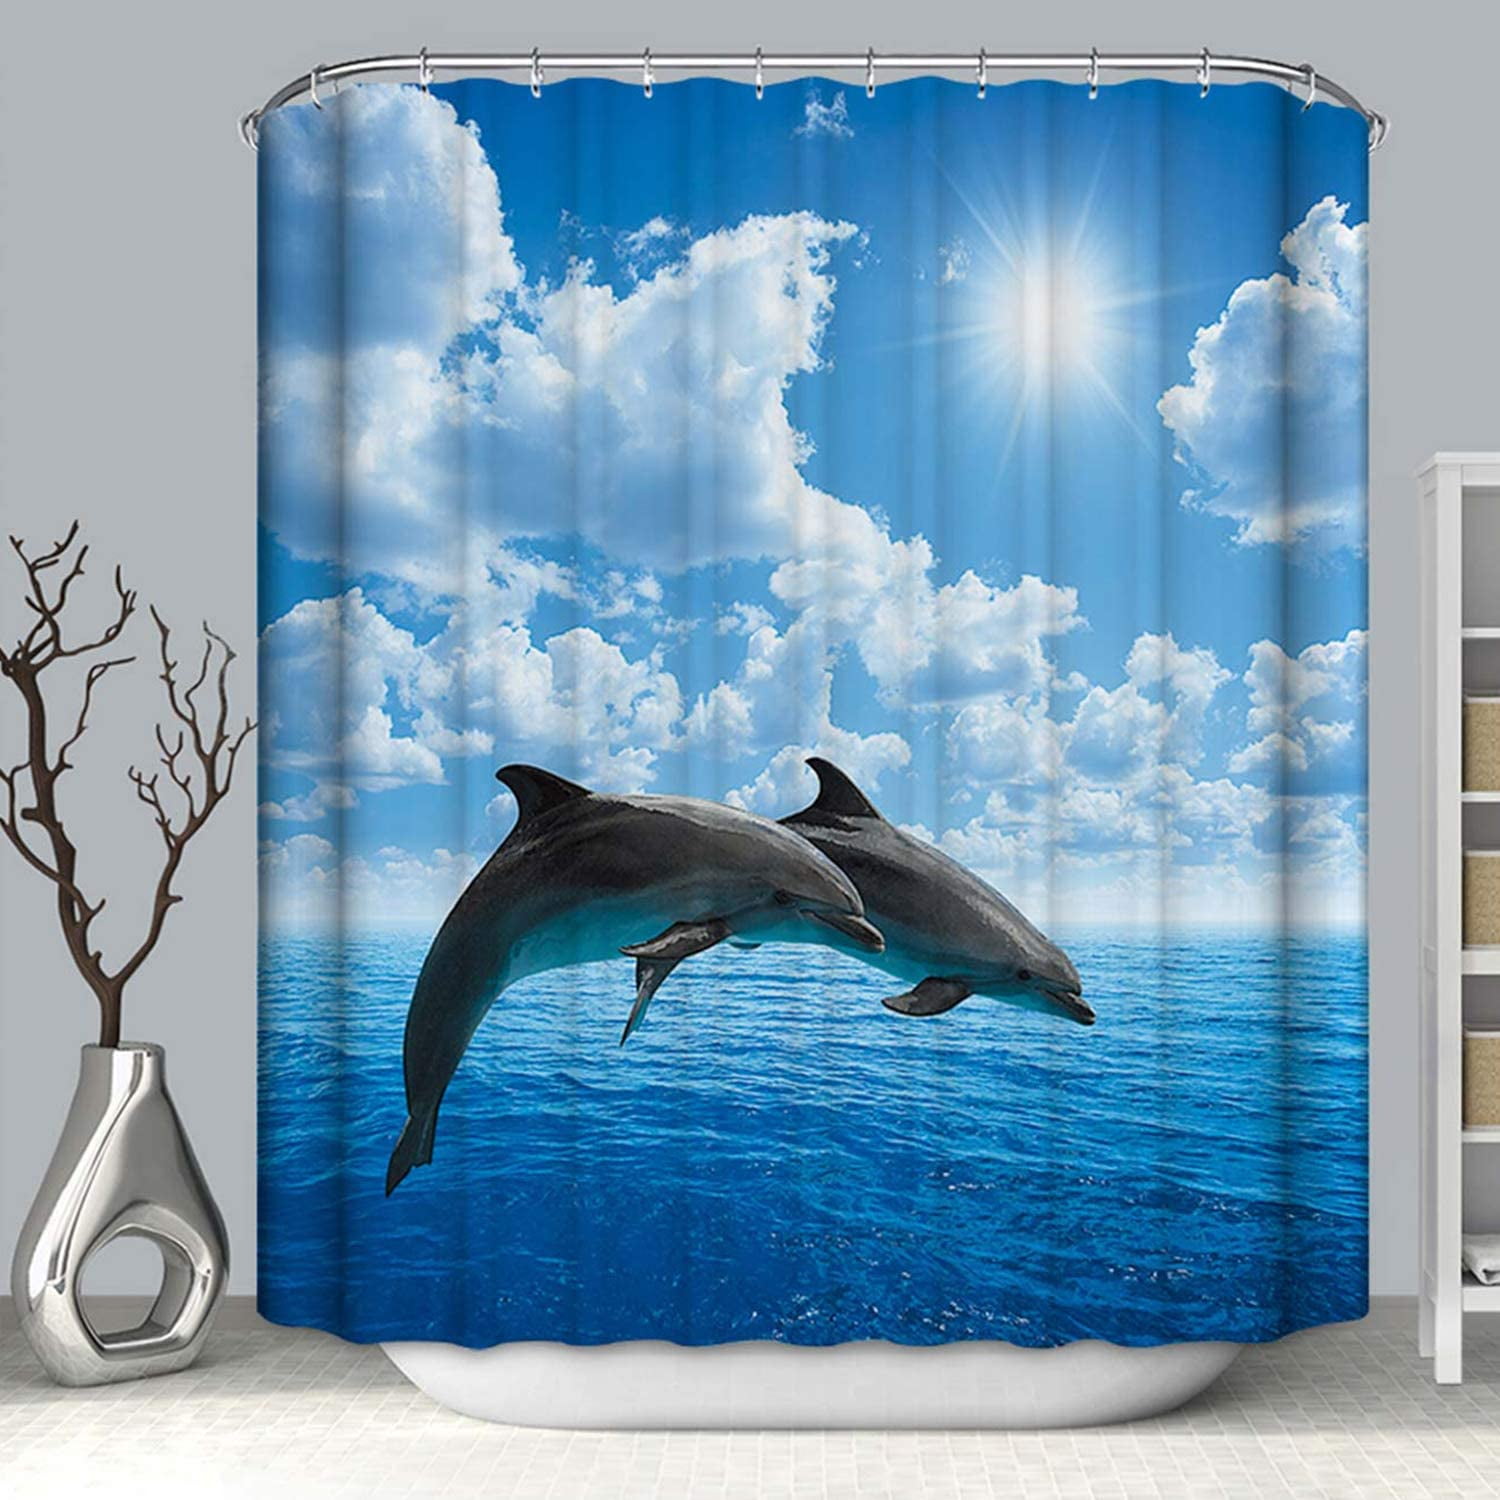 Oceanic Fish Dolphins Turtle Fabric Bathroom Waterproof Shower Curtain & 12 Hook 